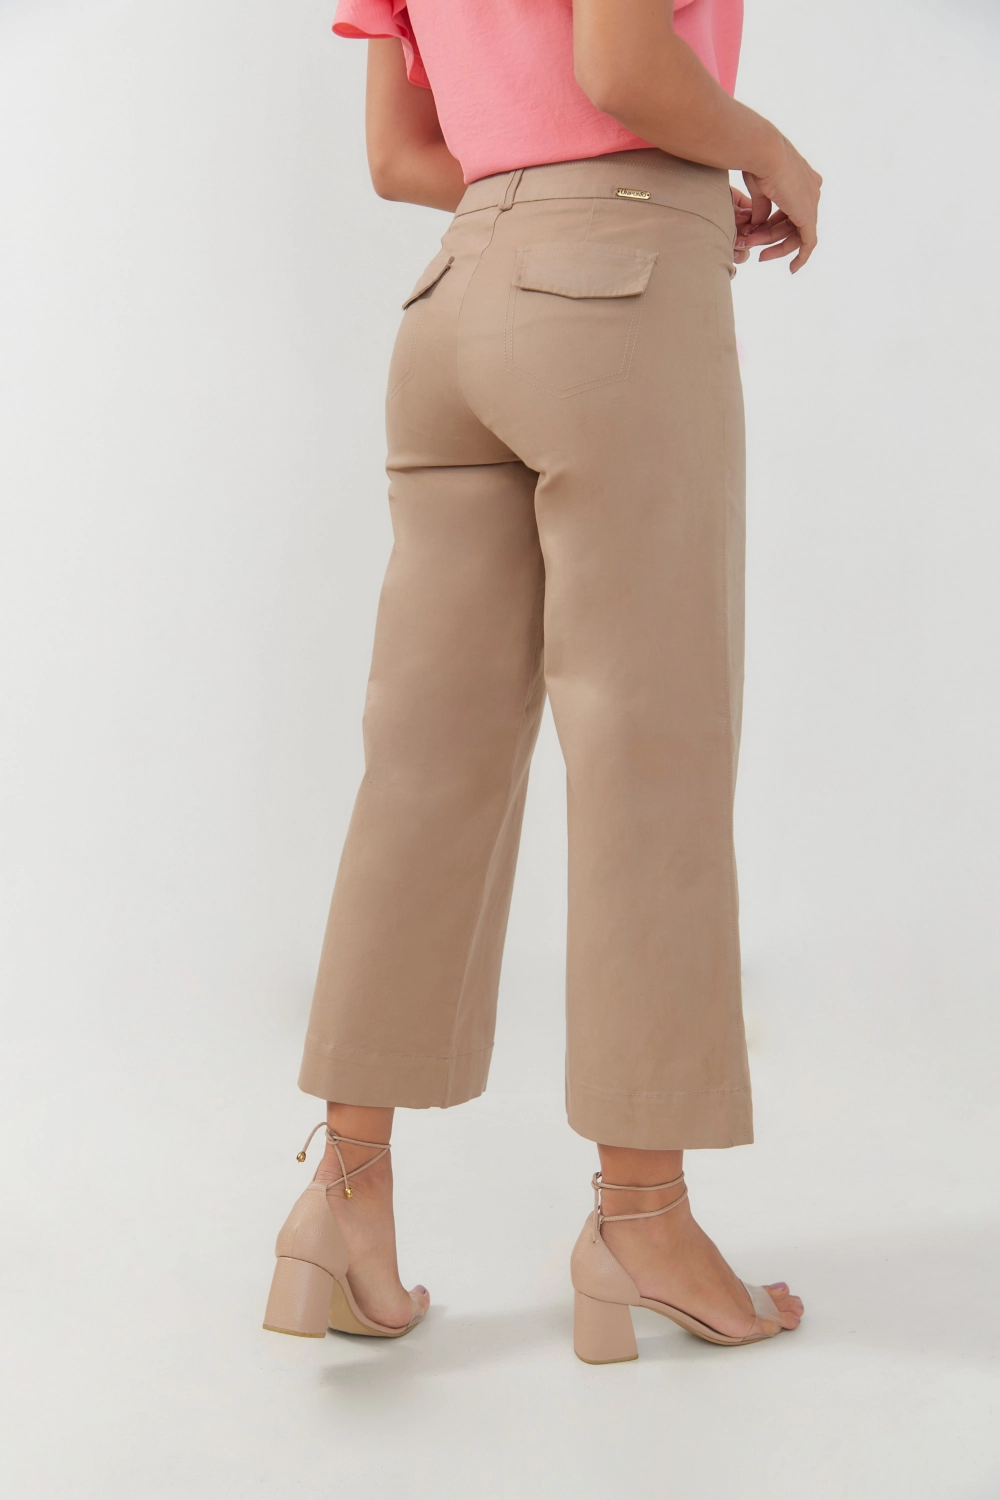 Pantalón cropped en dril pretina ancha. Kaki talla 16